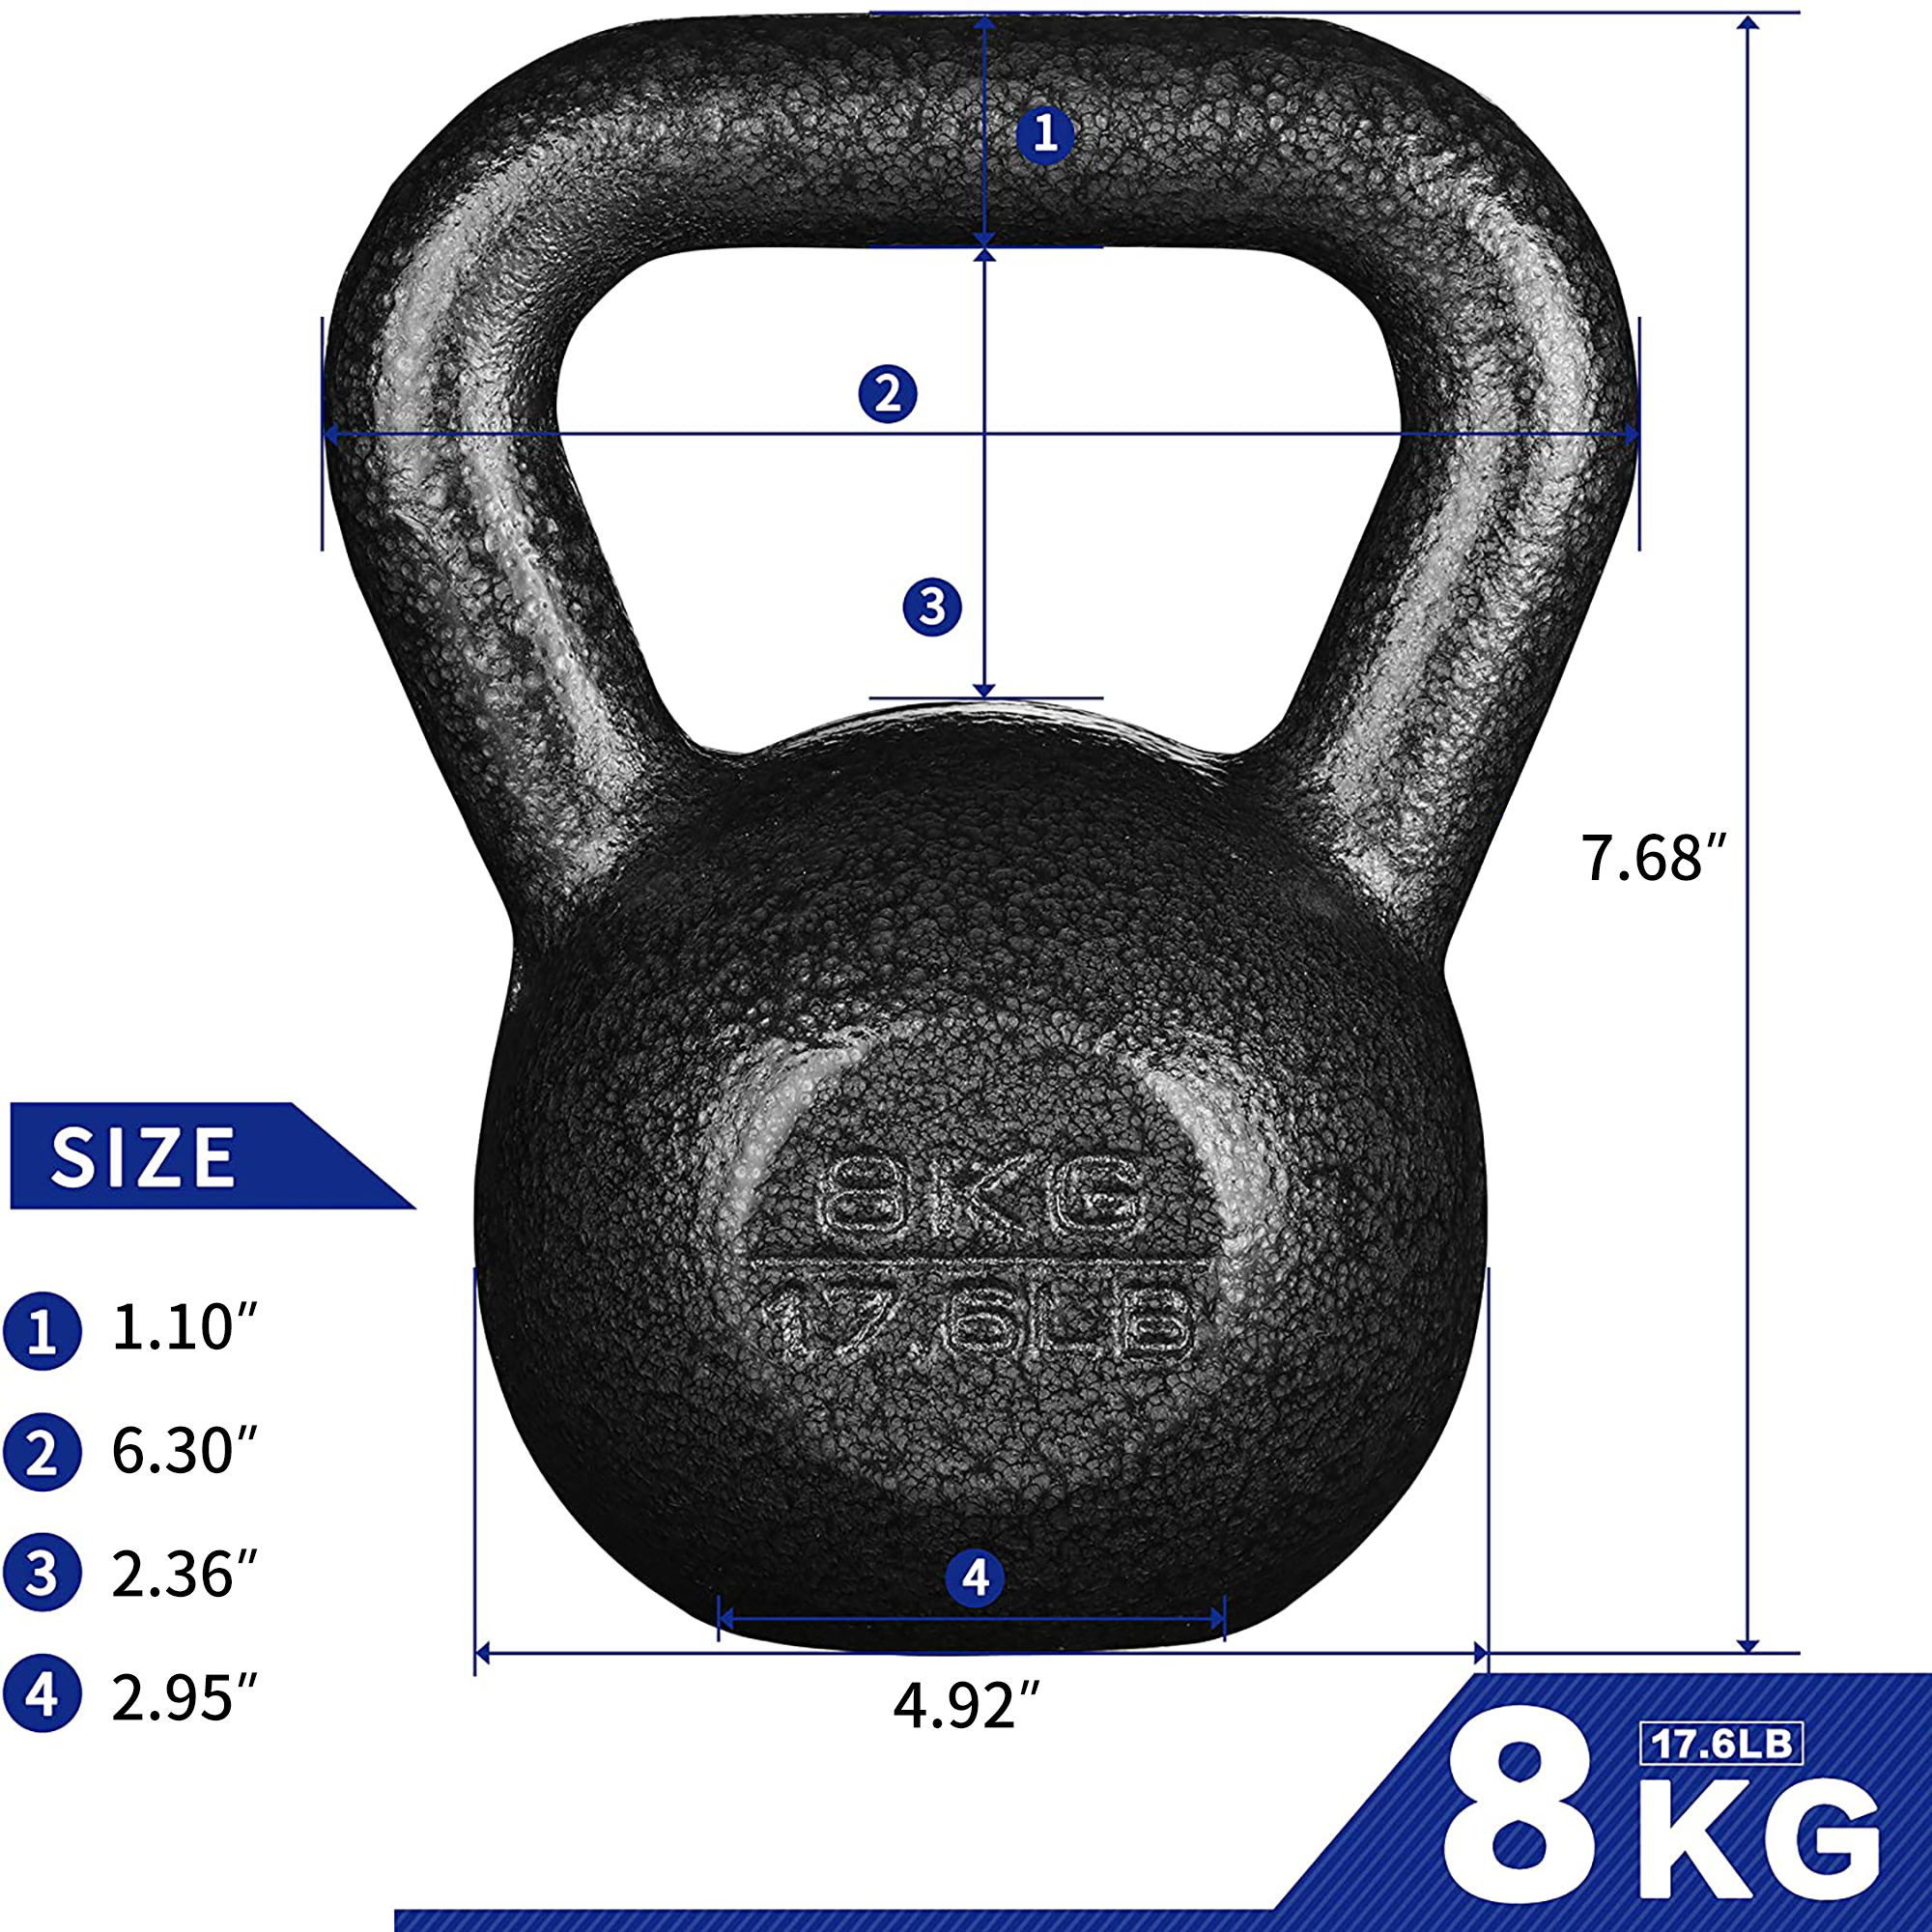 Athletic Works 8KG Kettlebell, Durable Black Hammertone Finish, 17.6lbs - image 3 of 7